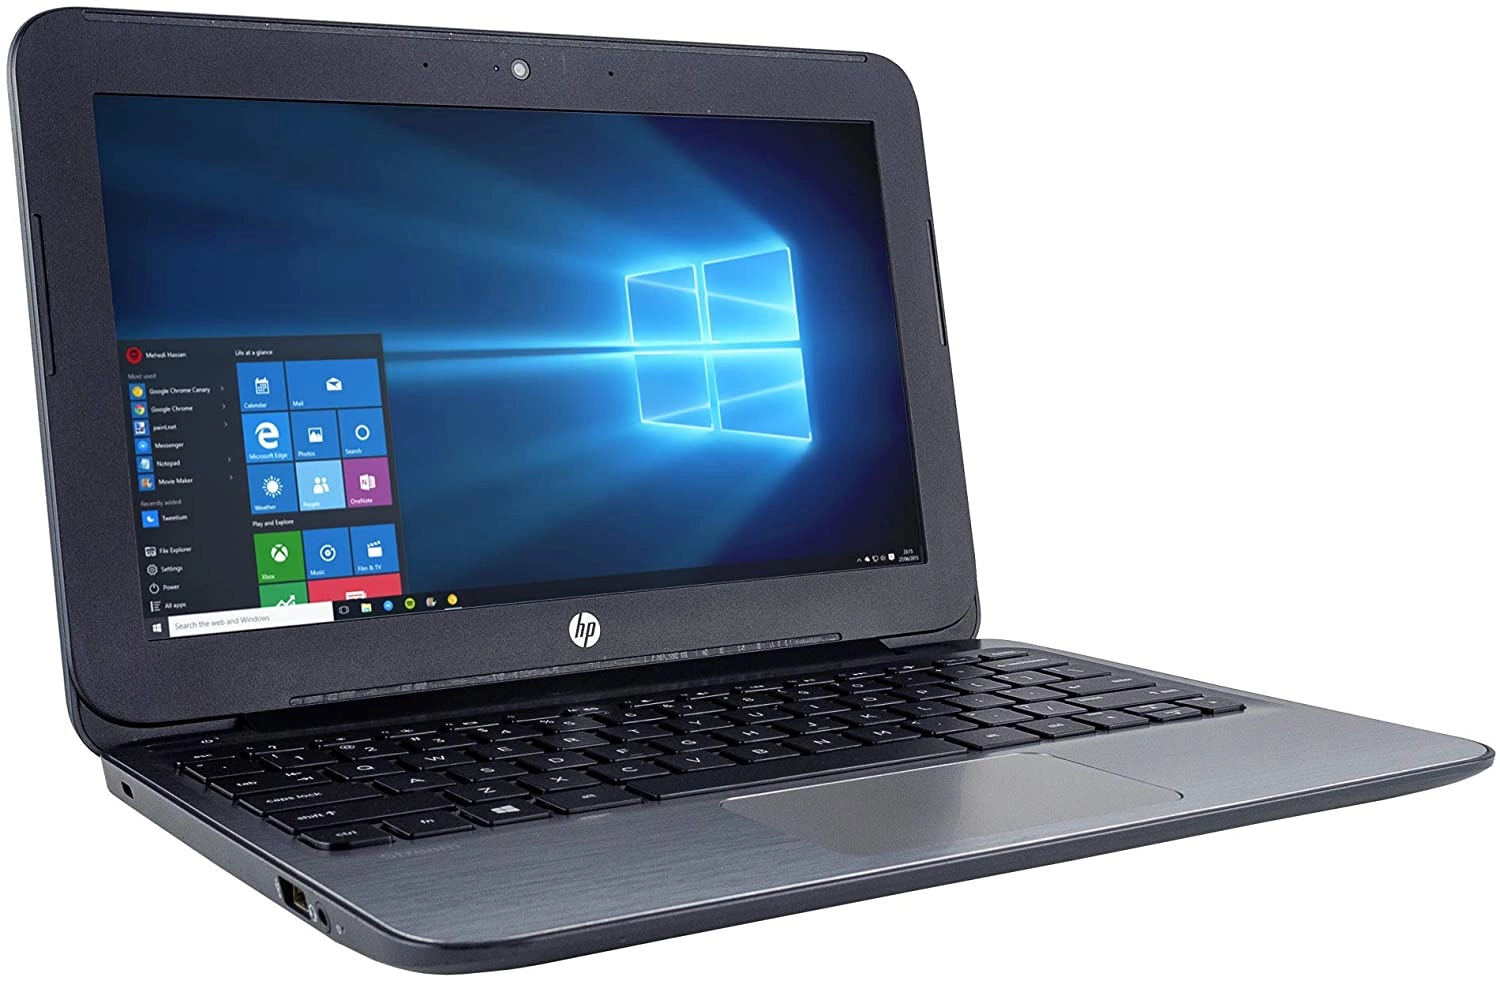 HP Stream 11 Pro G2 laptop image